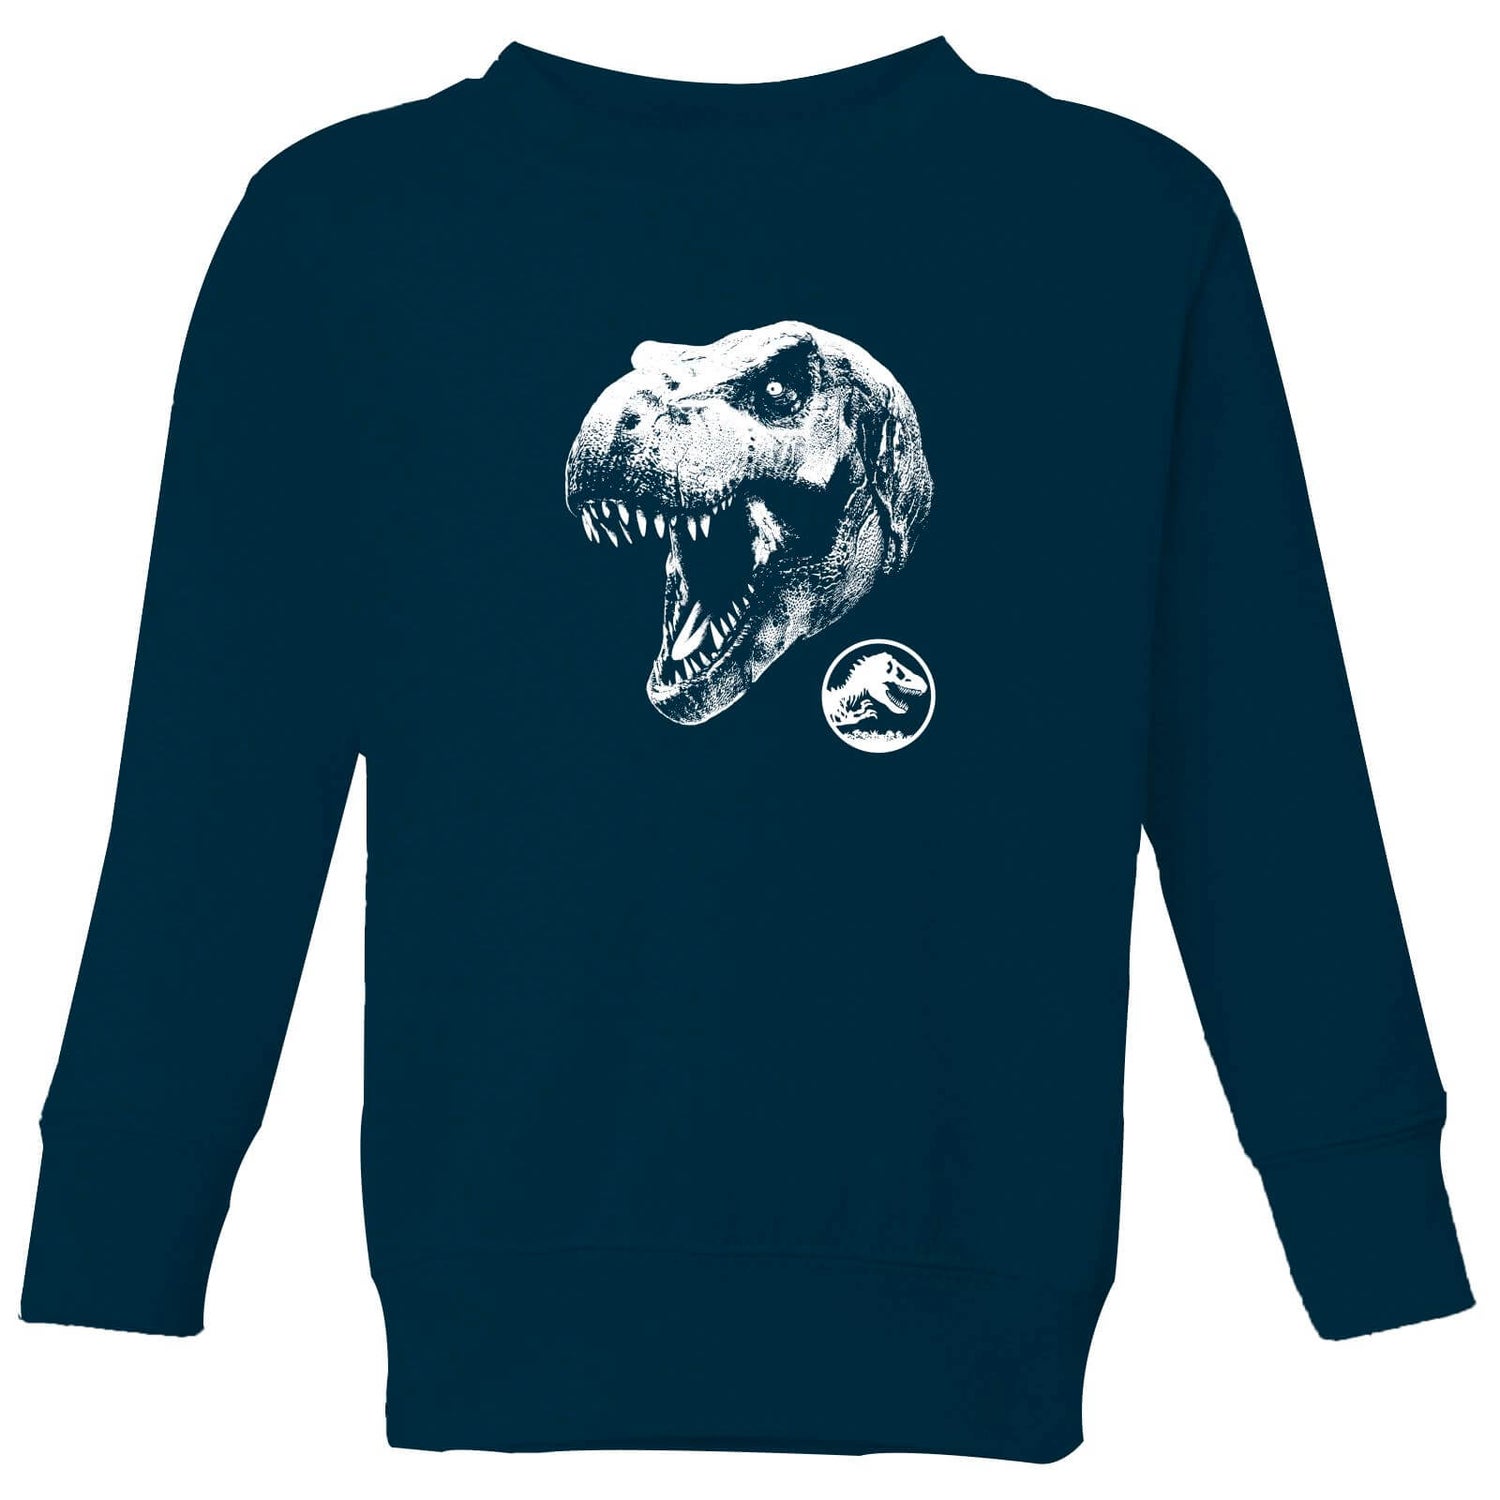 Jurassic Park T Rex Kids' Sweatshirt - Navy